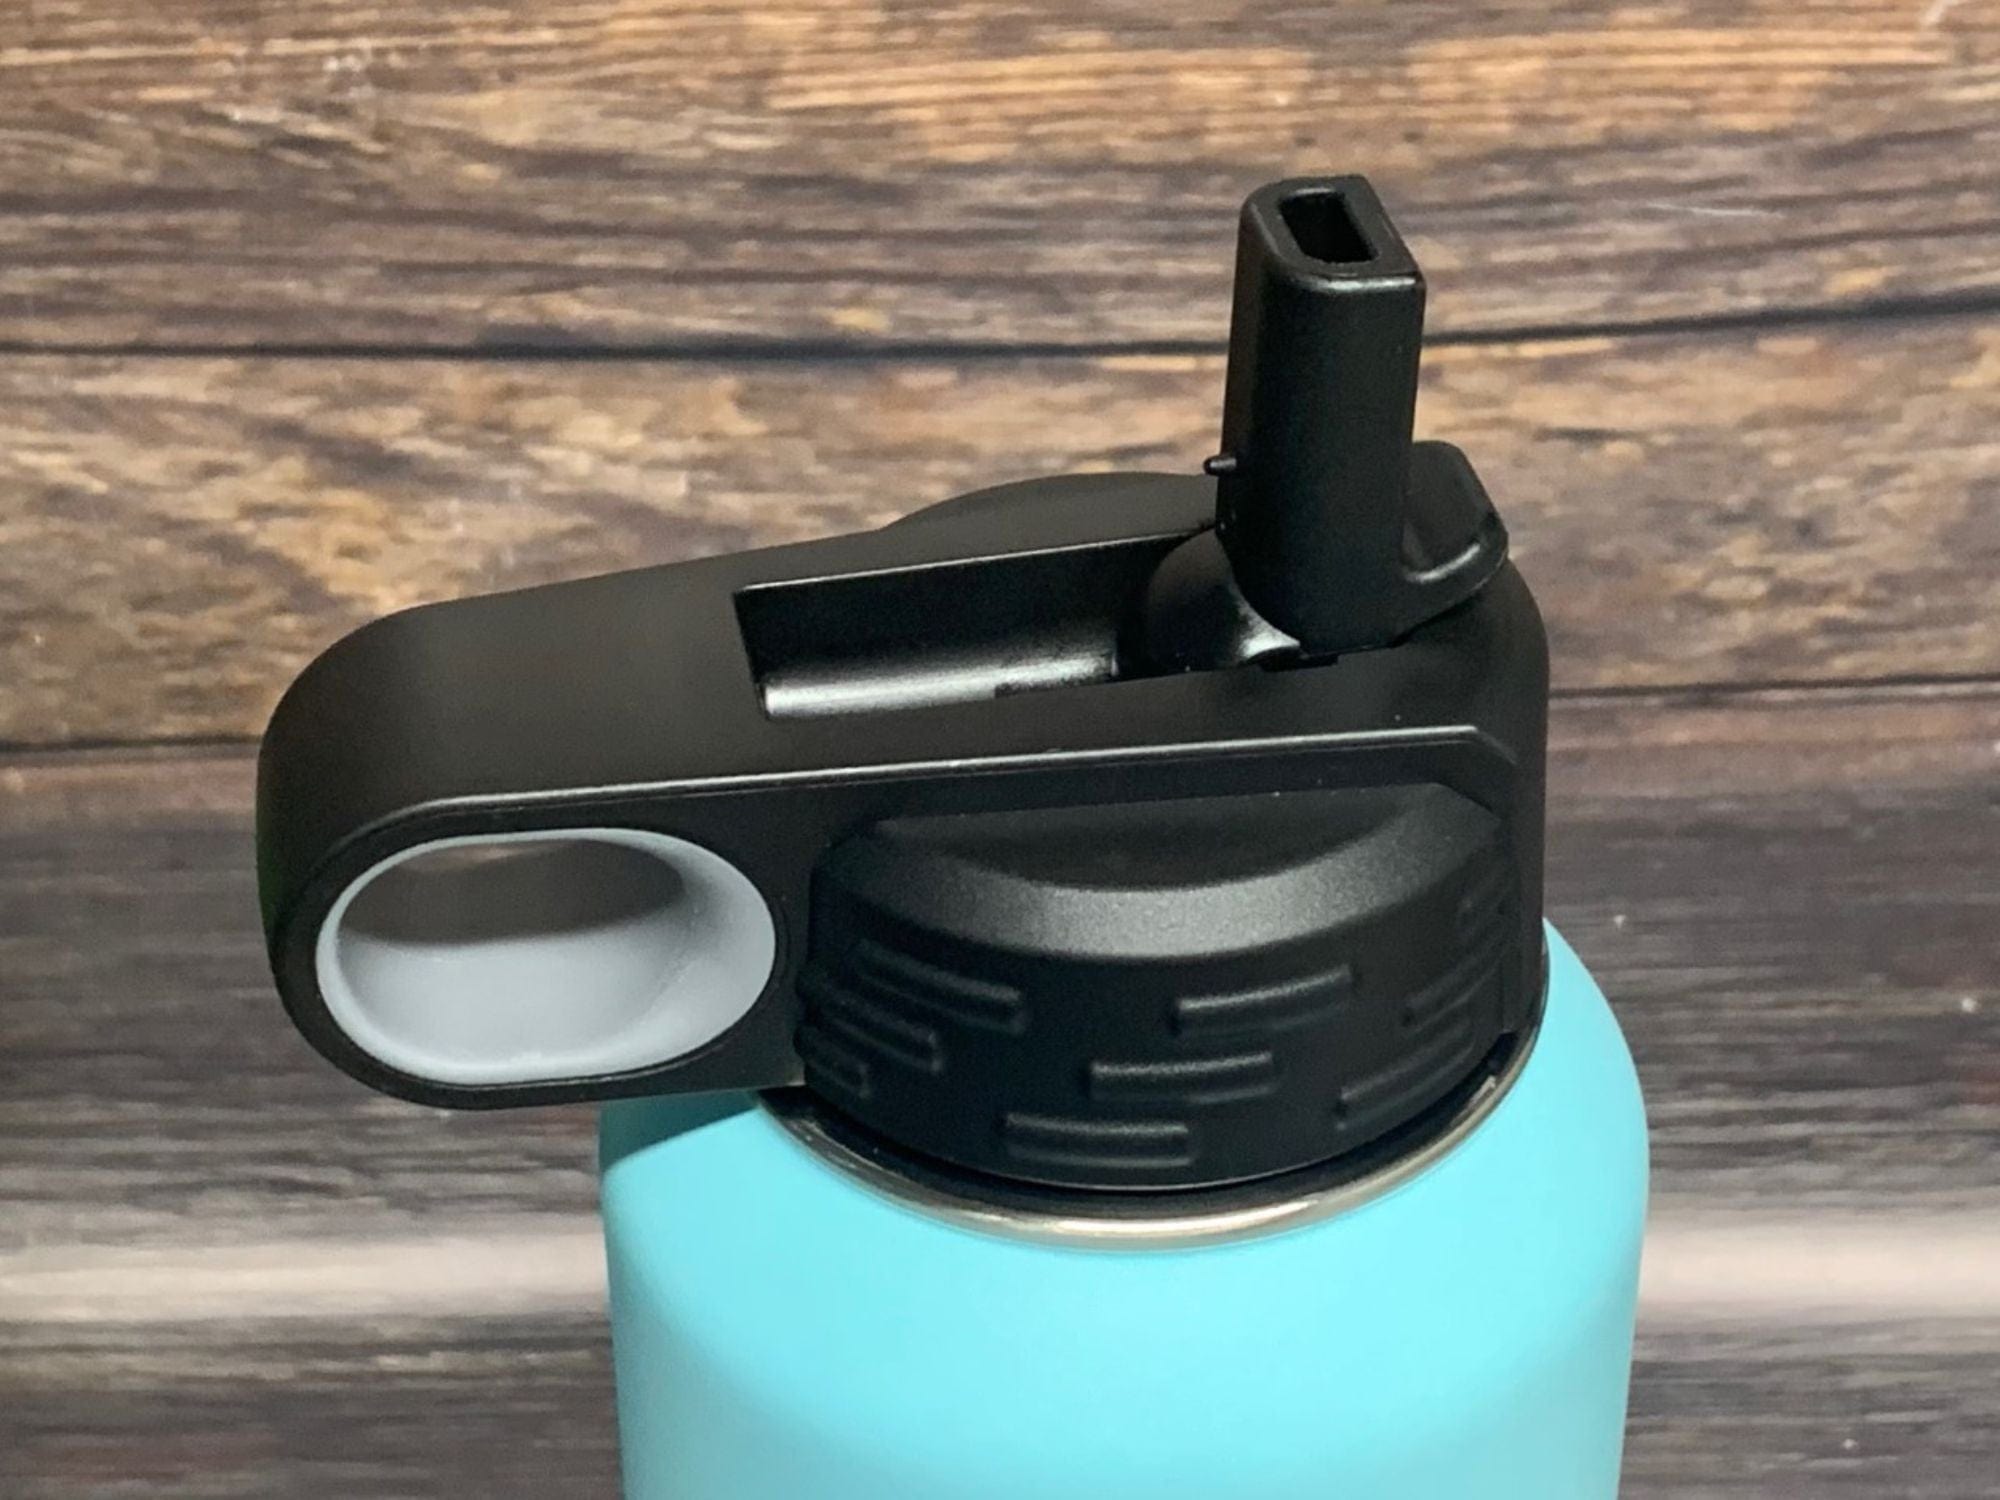 Engraved Summit Water Bottle